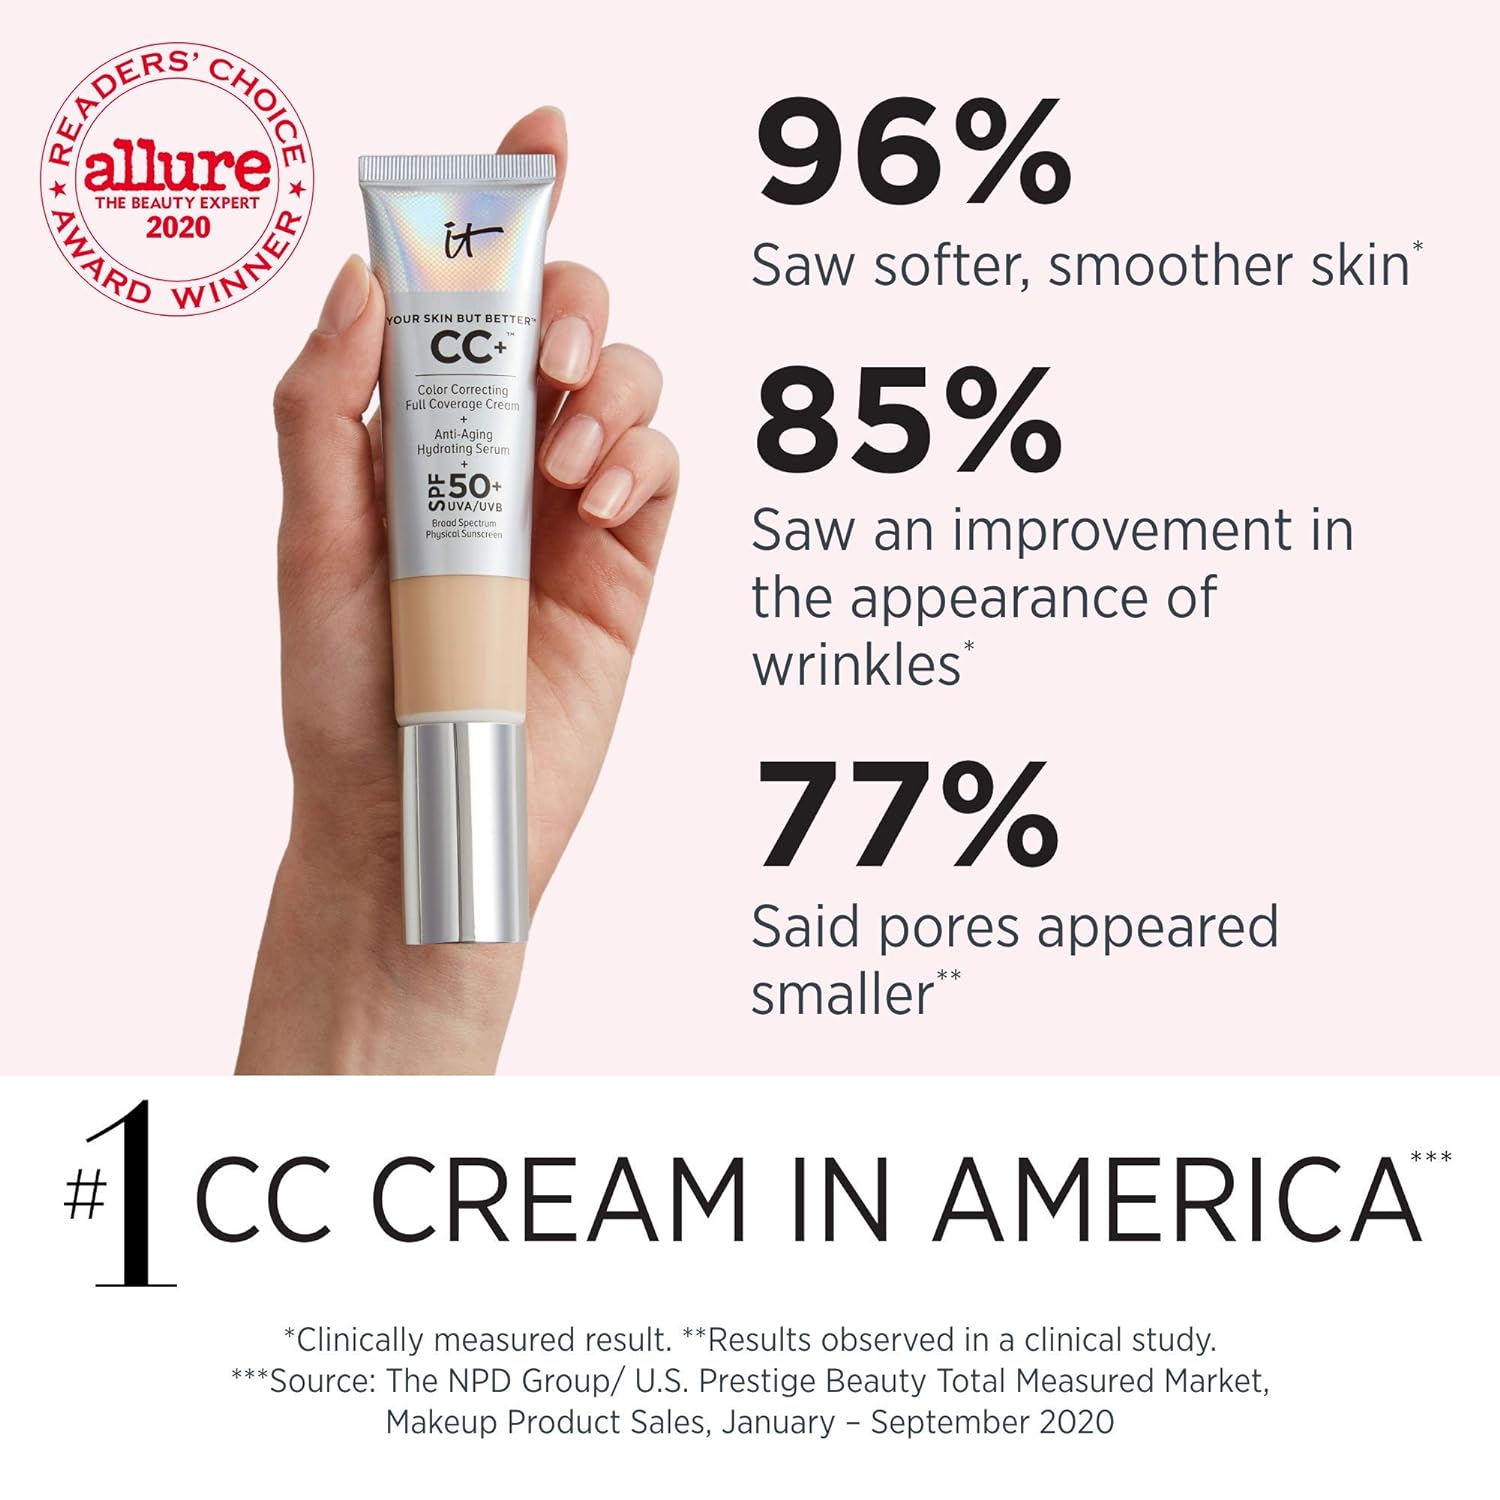  IT Cosmetics Your Skin But Better CC+ Cream, Light (W) - Color Correcting Cream, Full-Coverage Foundation, Anti-Aging Serum & SPF 50+ Sunscreen - Natural Finish - 1.08 fl oz